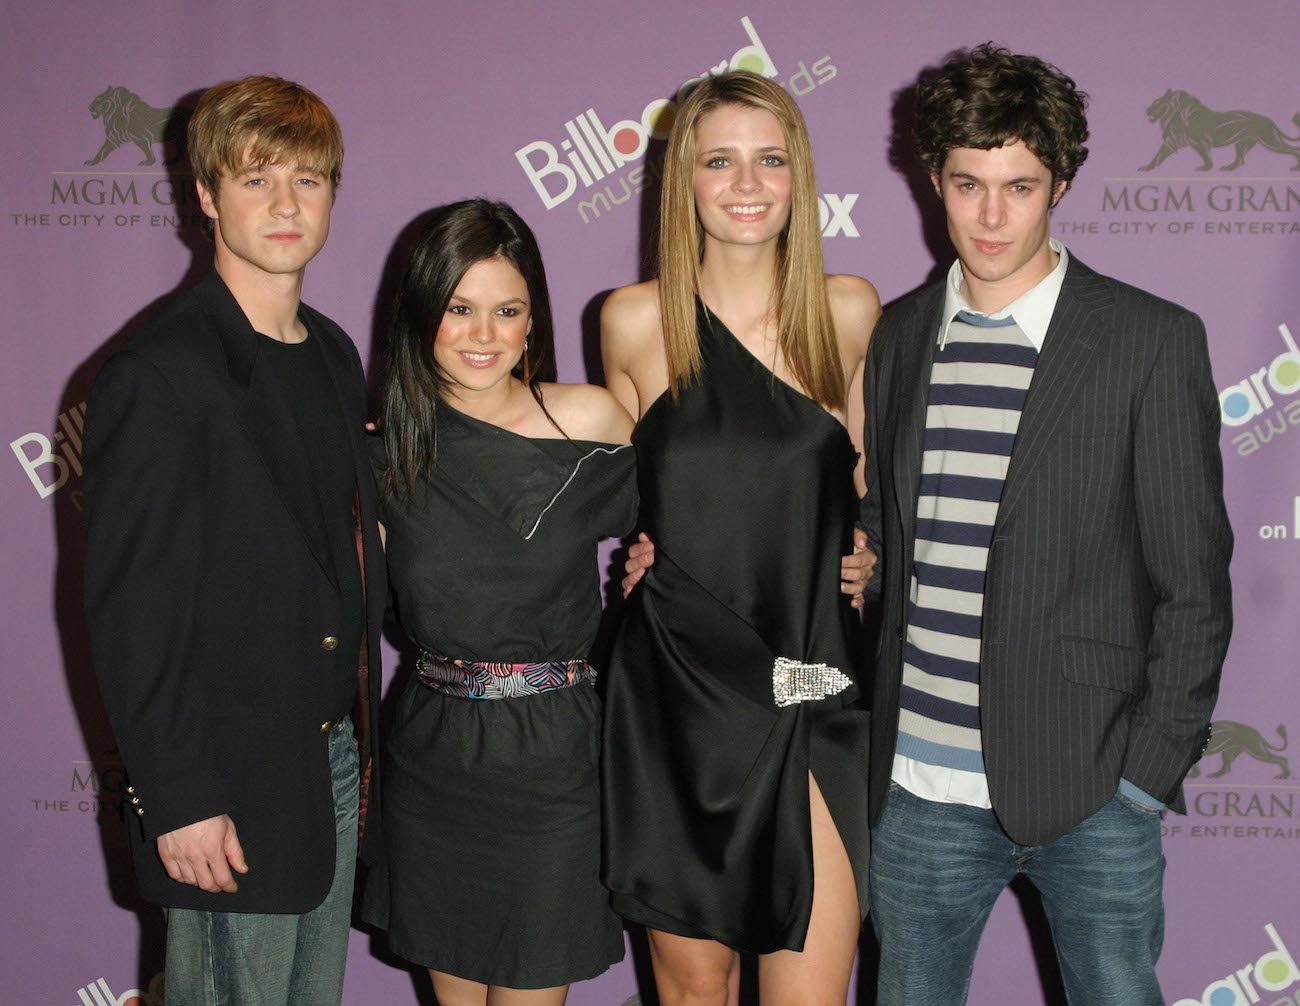 Ben McKenzie, Rachel Bilson, Mischa Barton, and Adam Brody at the 2003 Billboard Music Awards